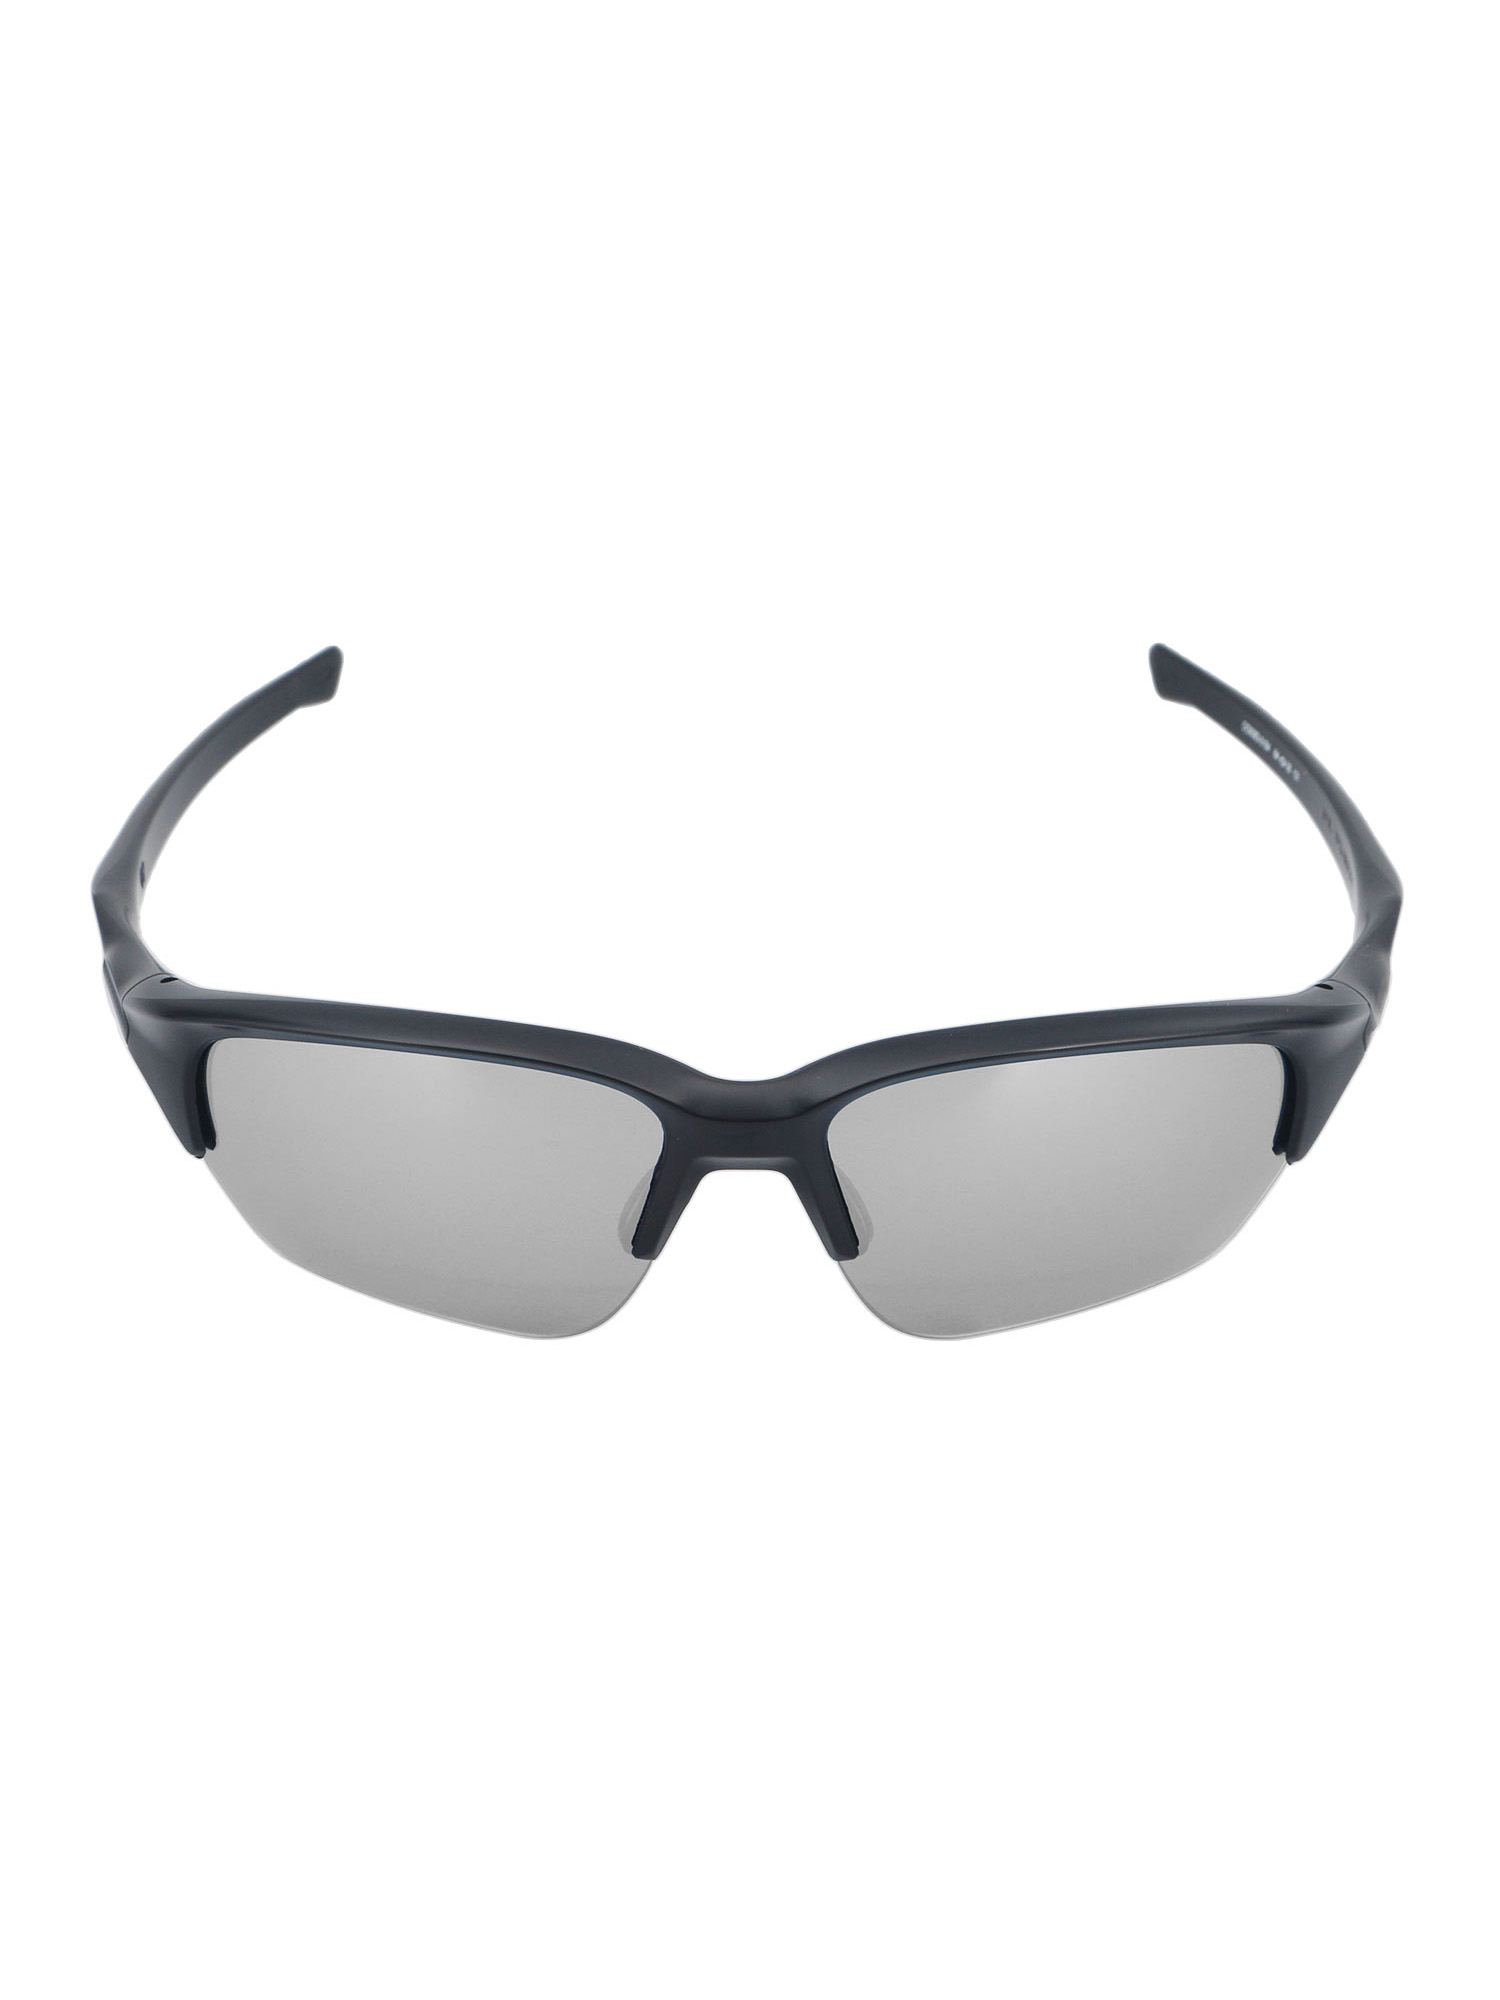 Walleva Titanium Polarized Replacement Lenses for Oakley Flak Beta Sunglasses - image 5 of 6